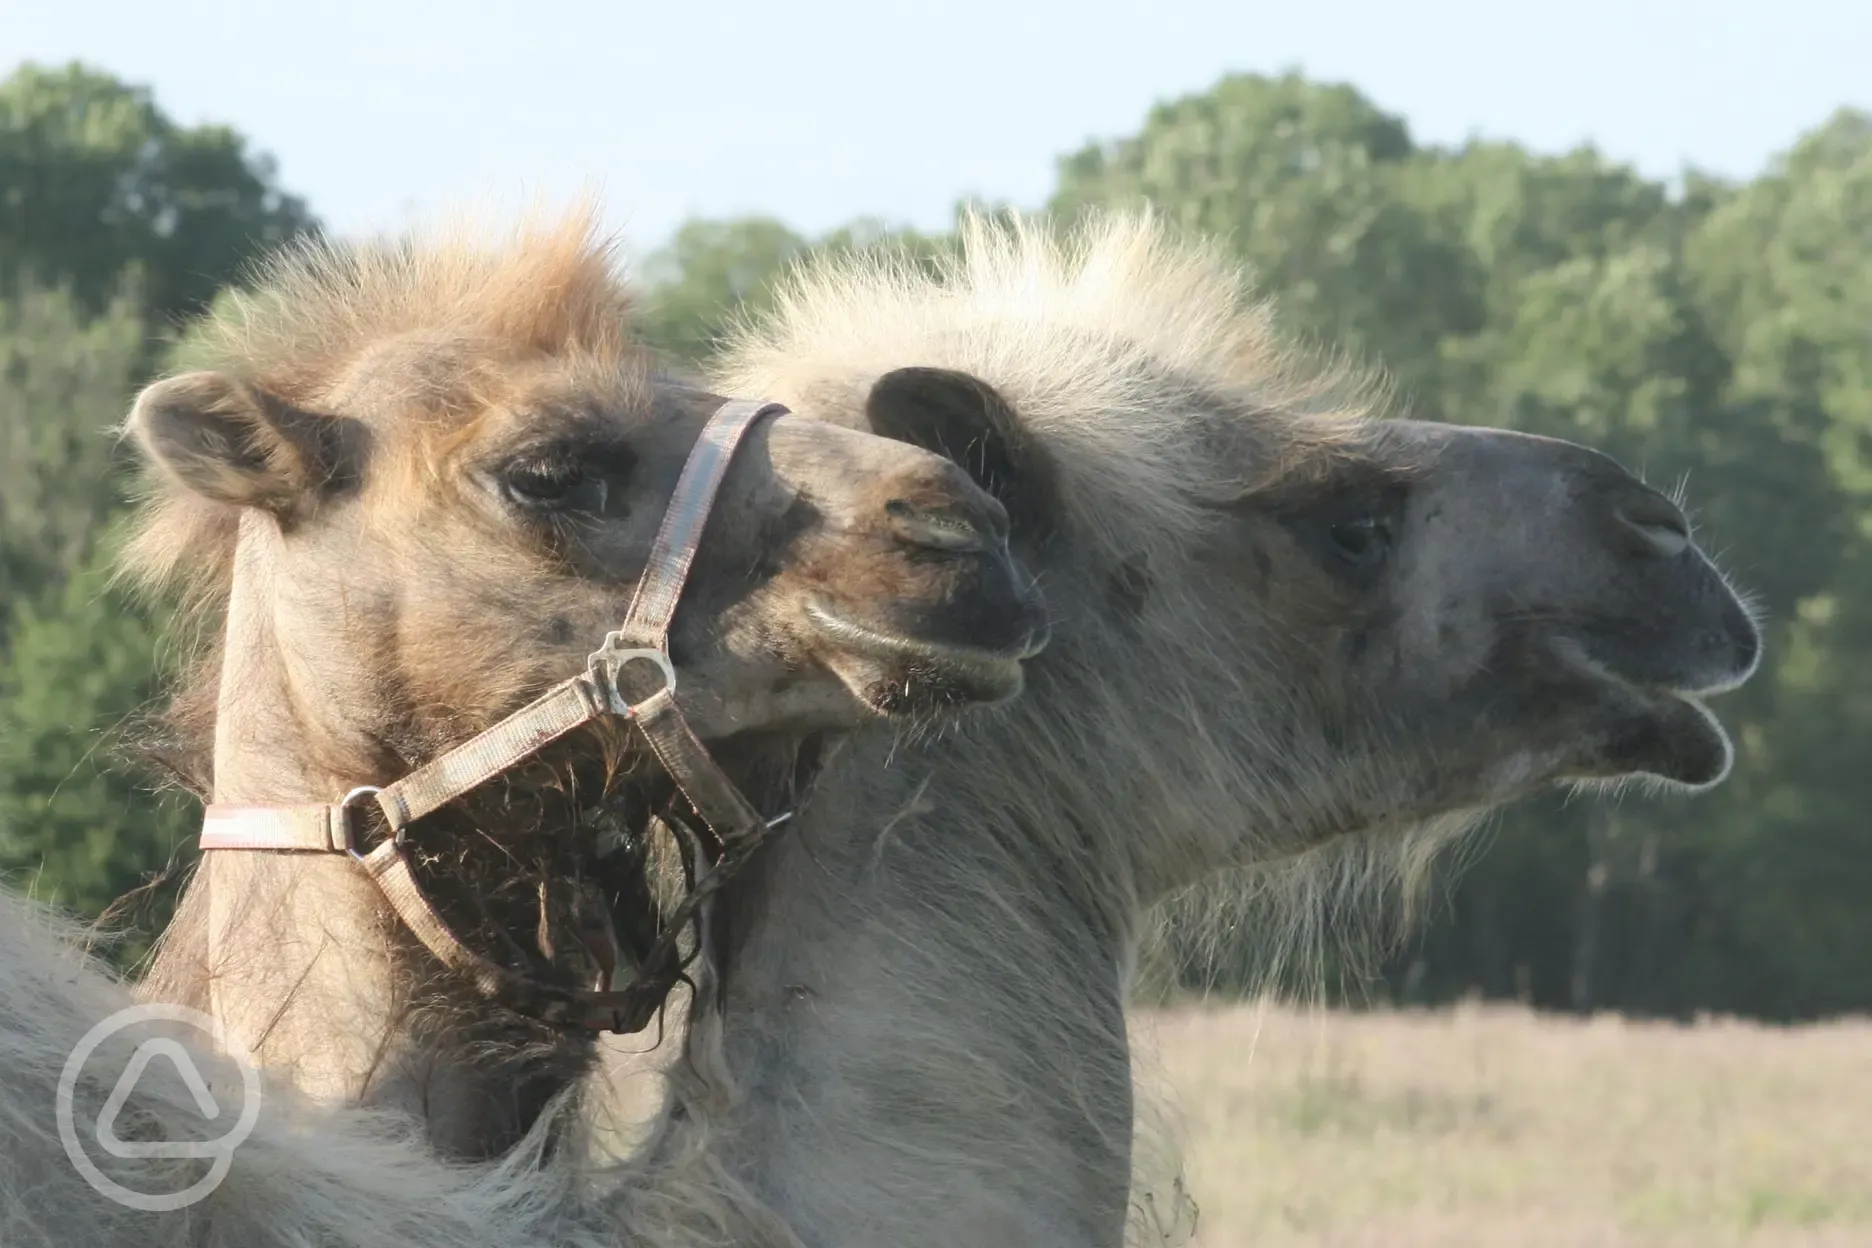 Batu and Jeffrey the camels